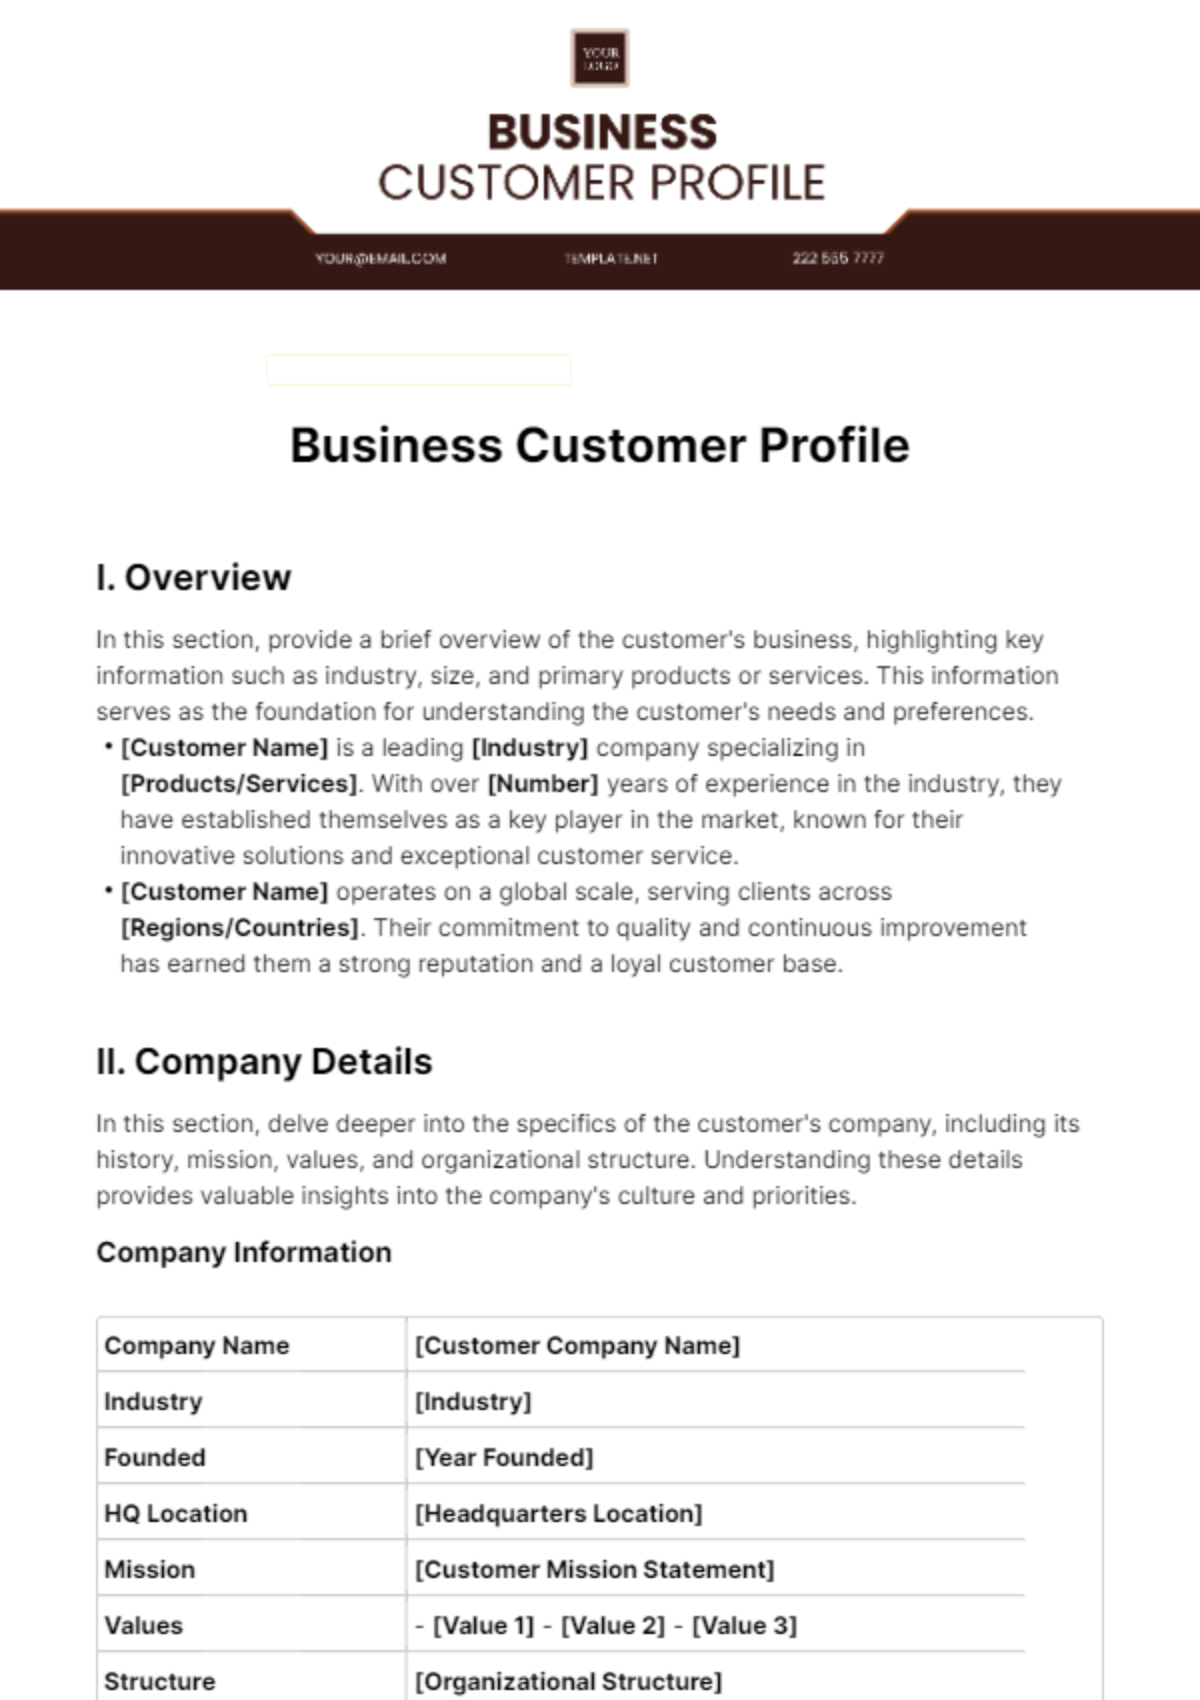 Business Customer Profile Template